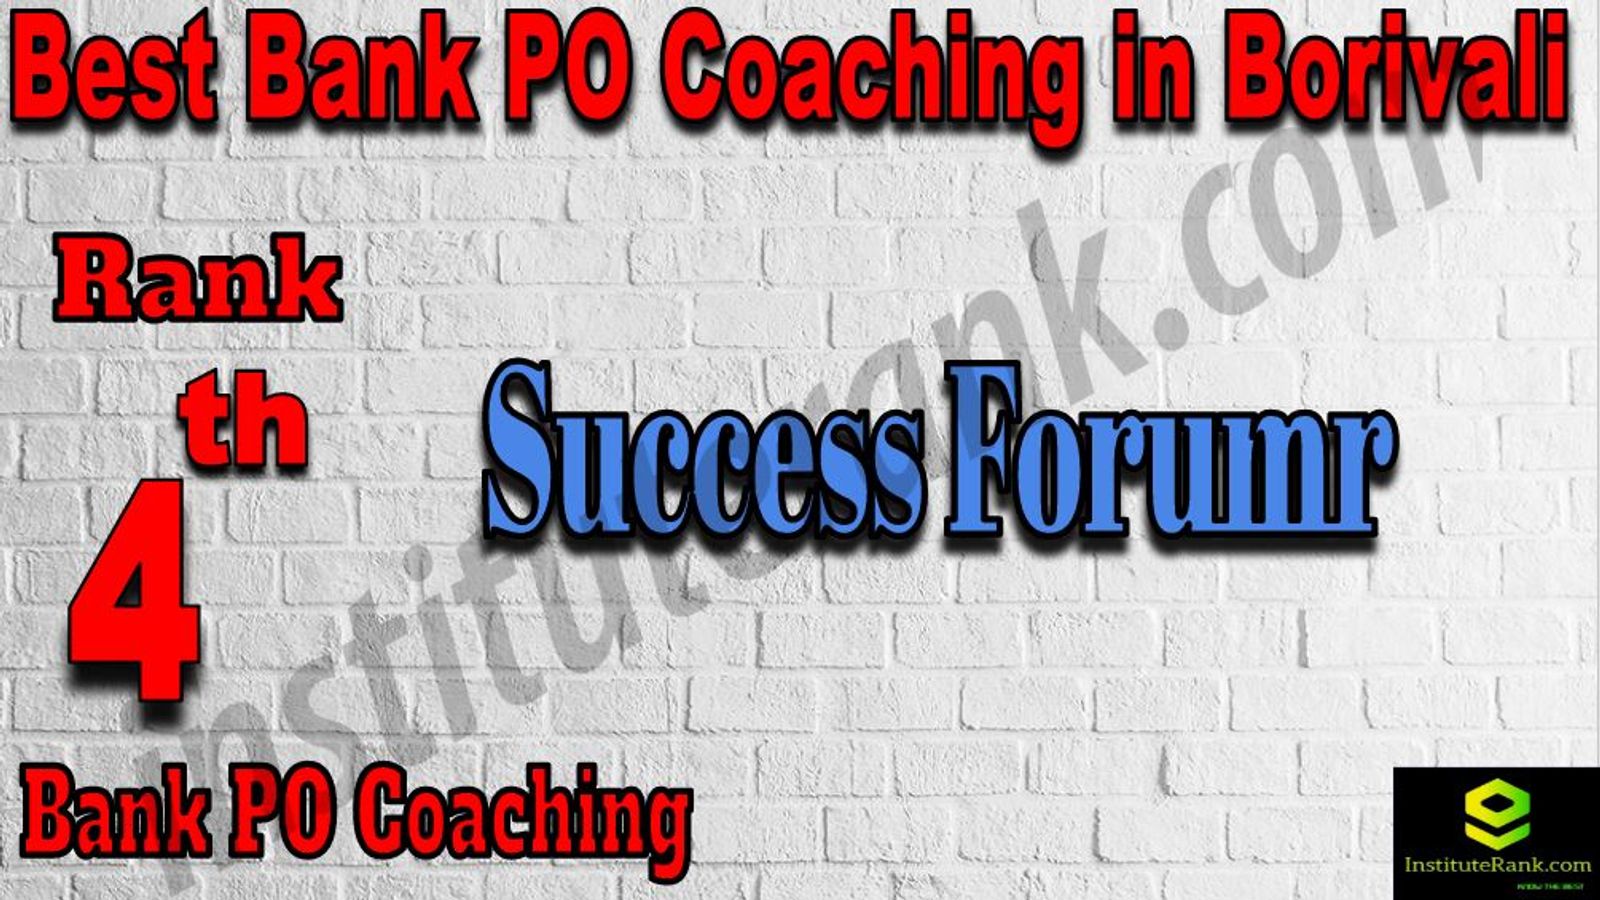 4th Best Bank PO Coaching in Borivali